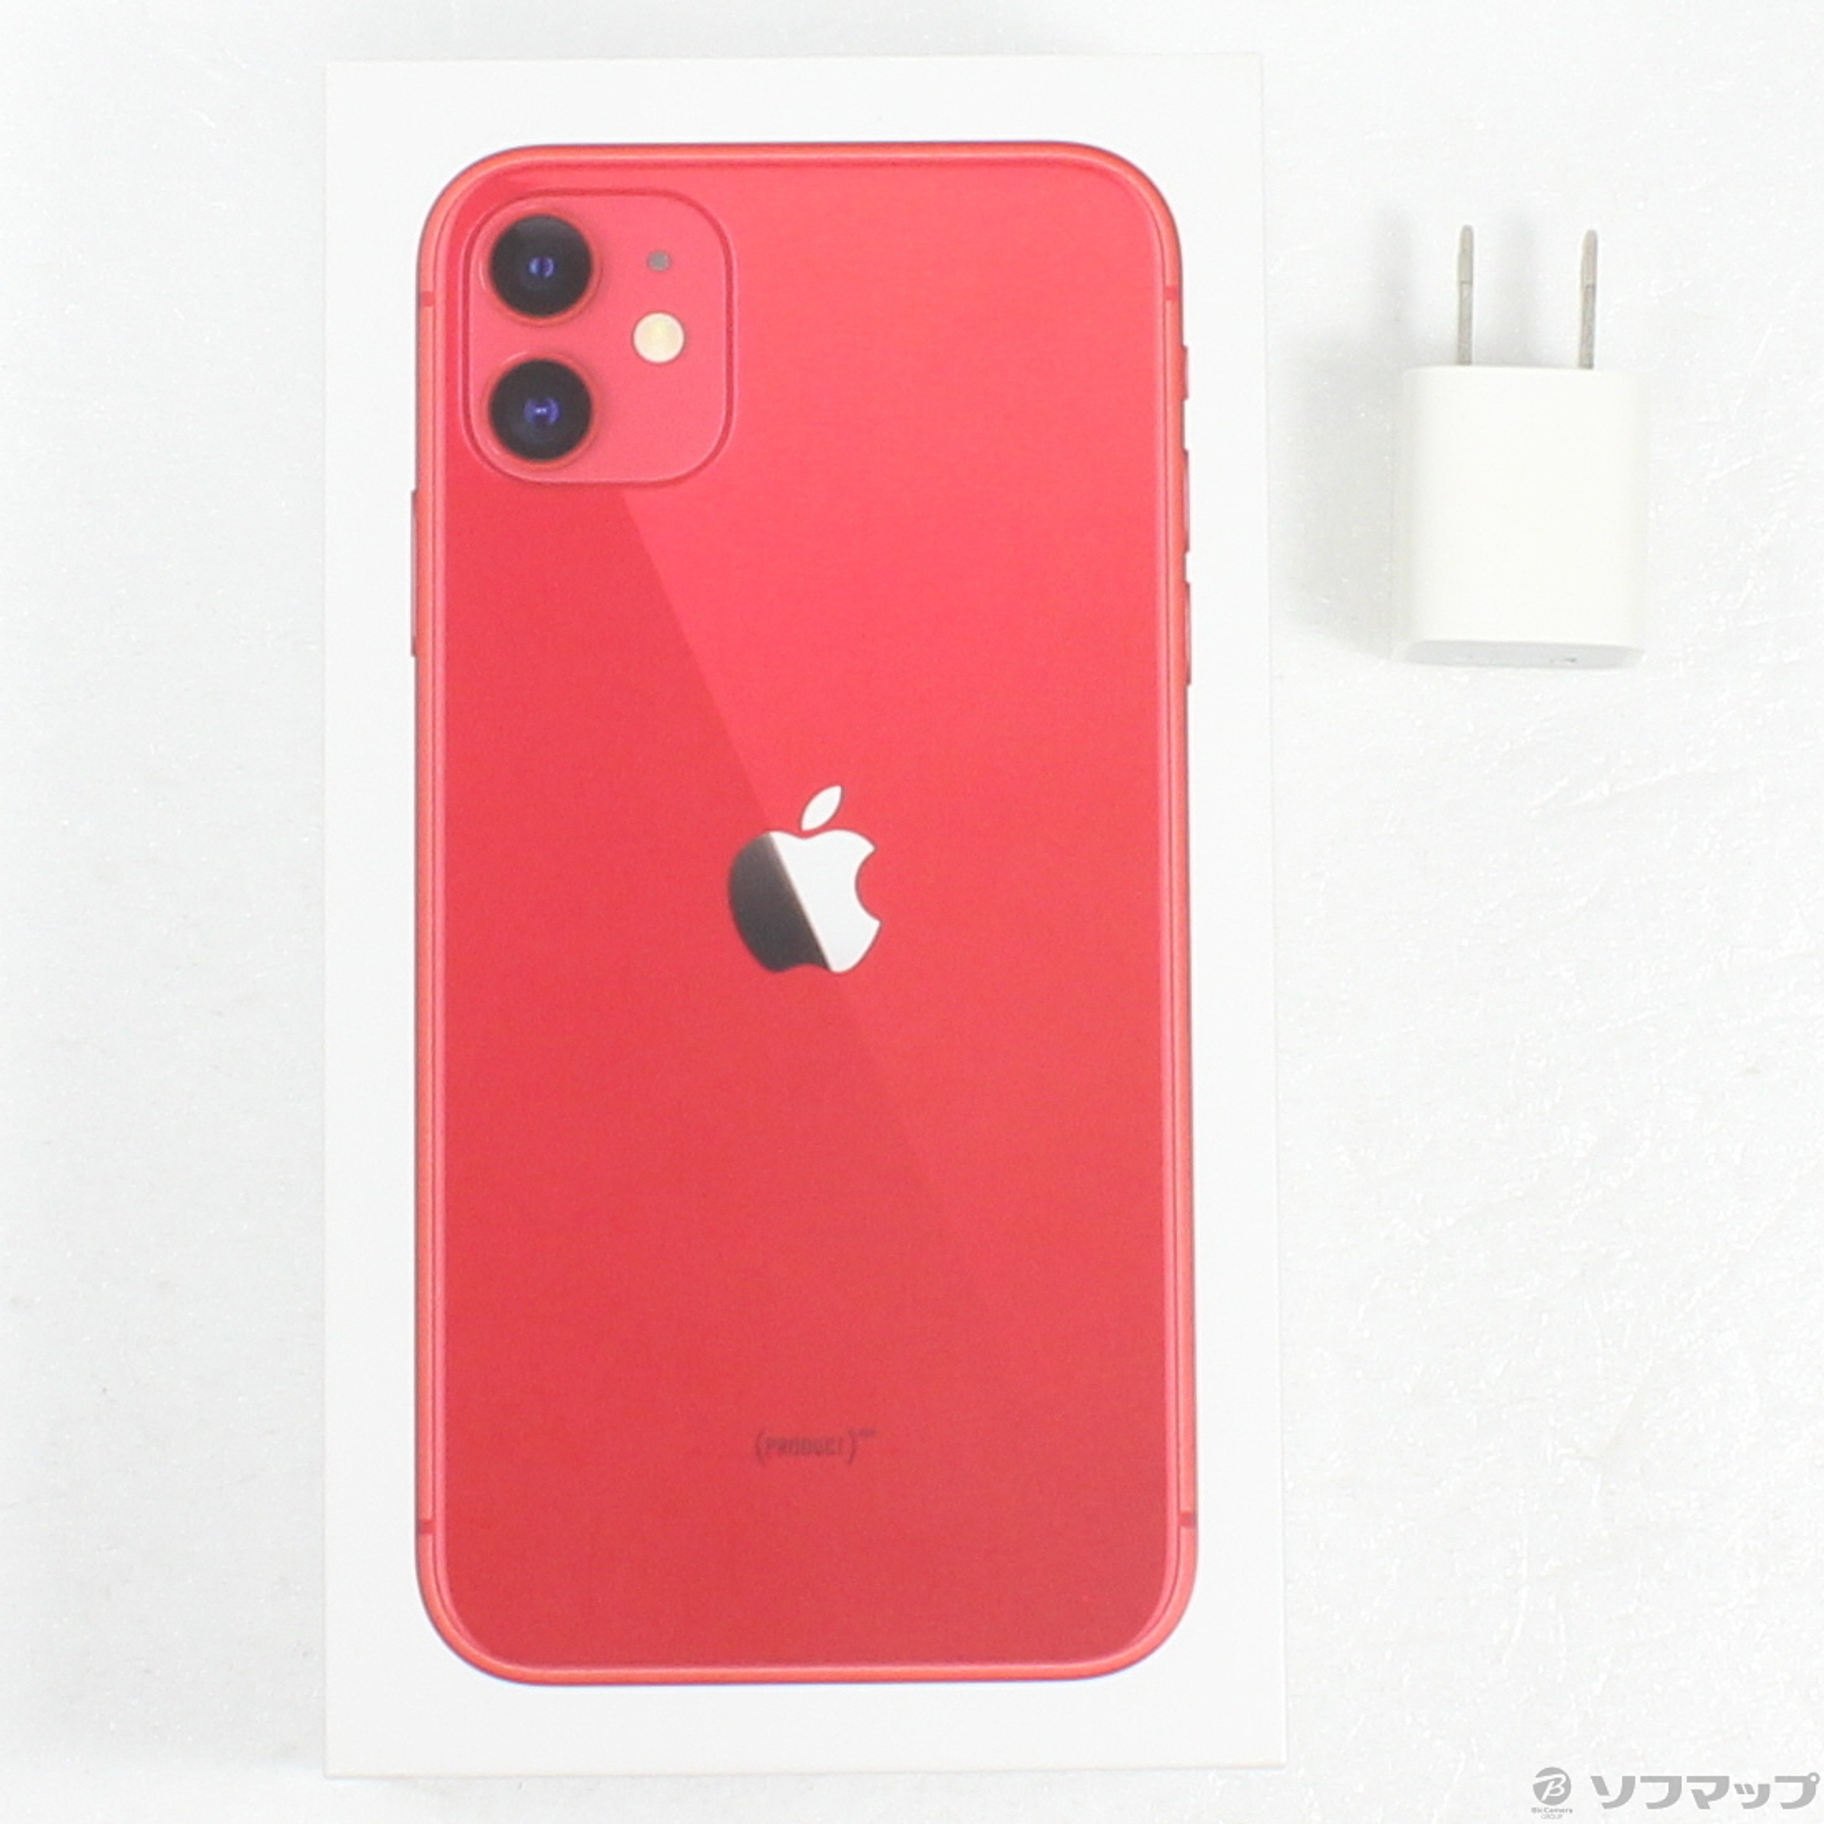 iPhone 11 128GB - (PRODUCT)Red SIMフリー